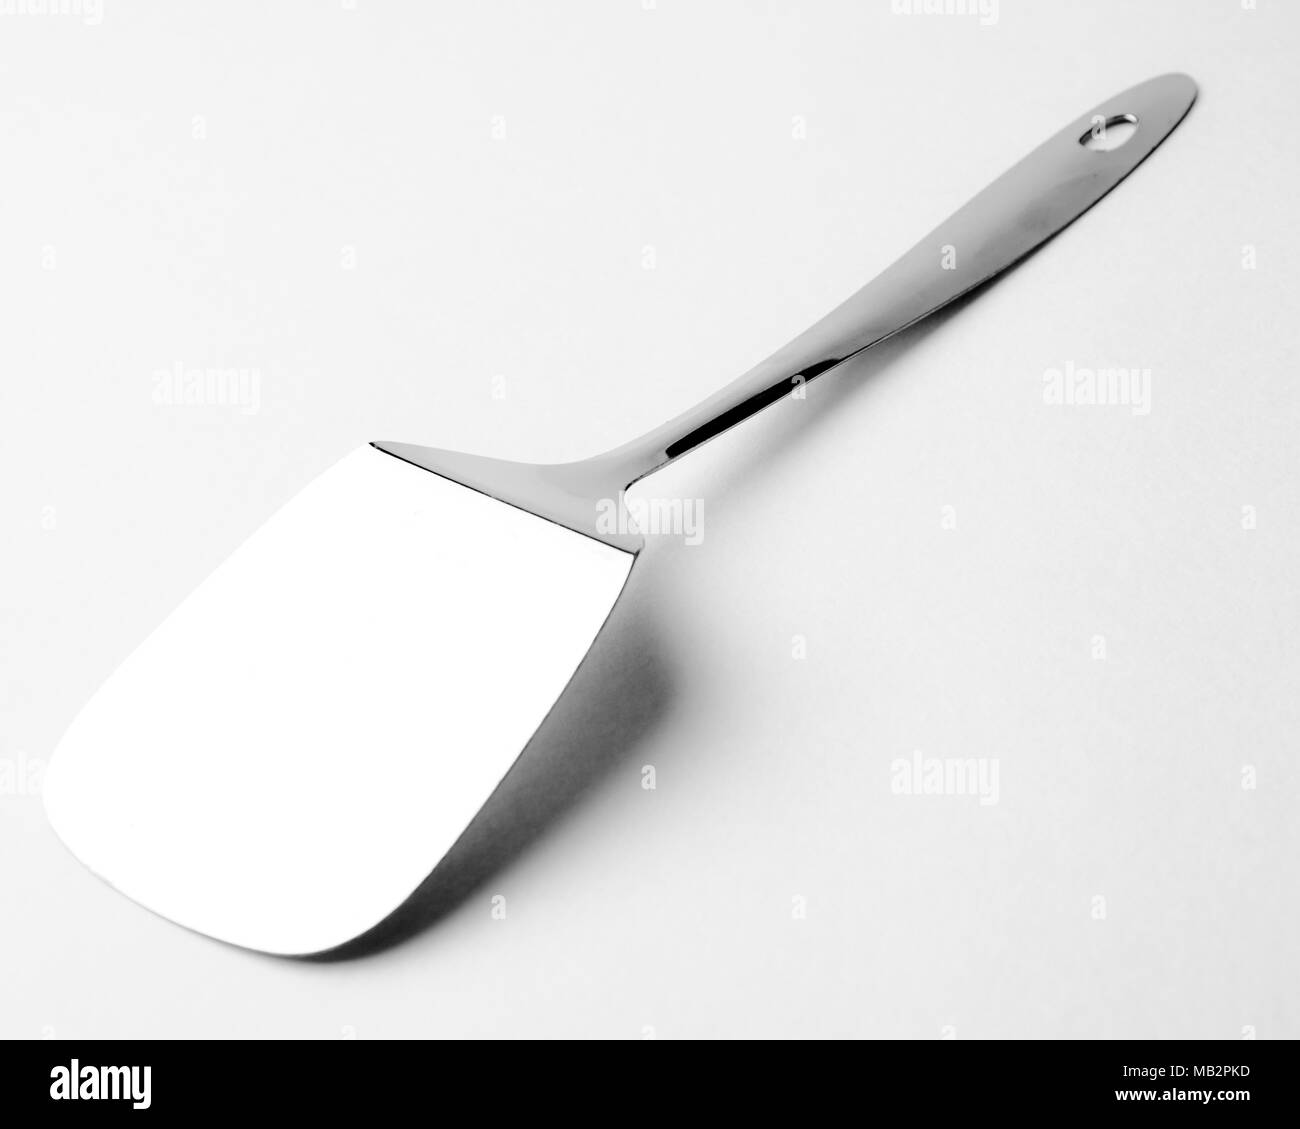 Kitchen Cooking Utensil Spatula Silver utensils used in kitchen Stock Photo